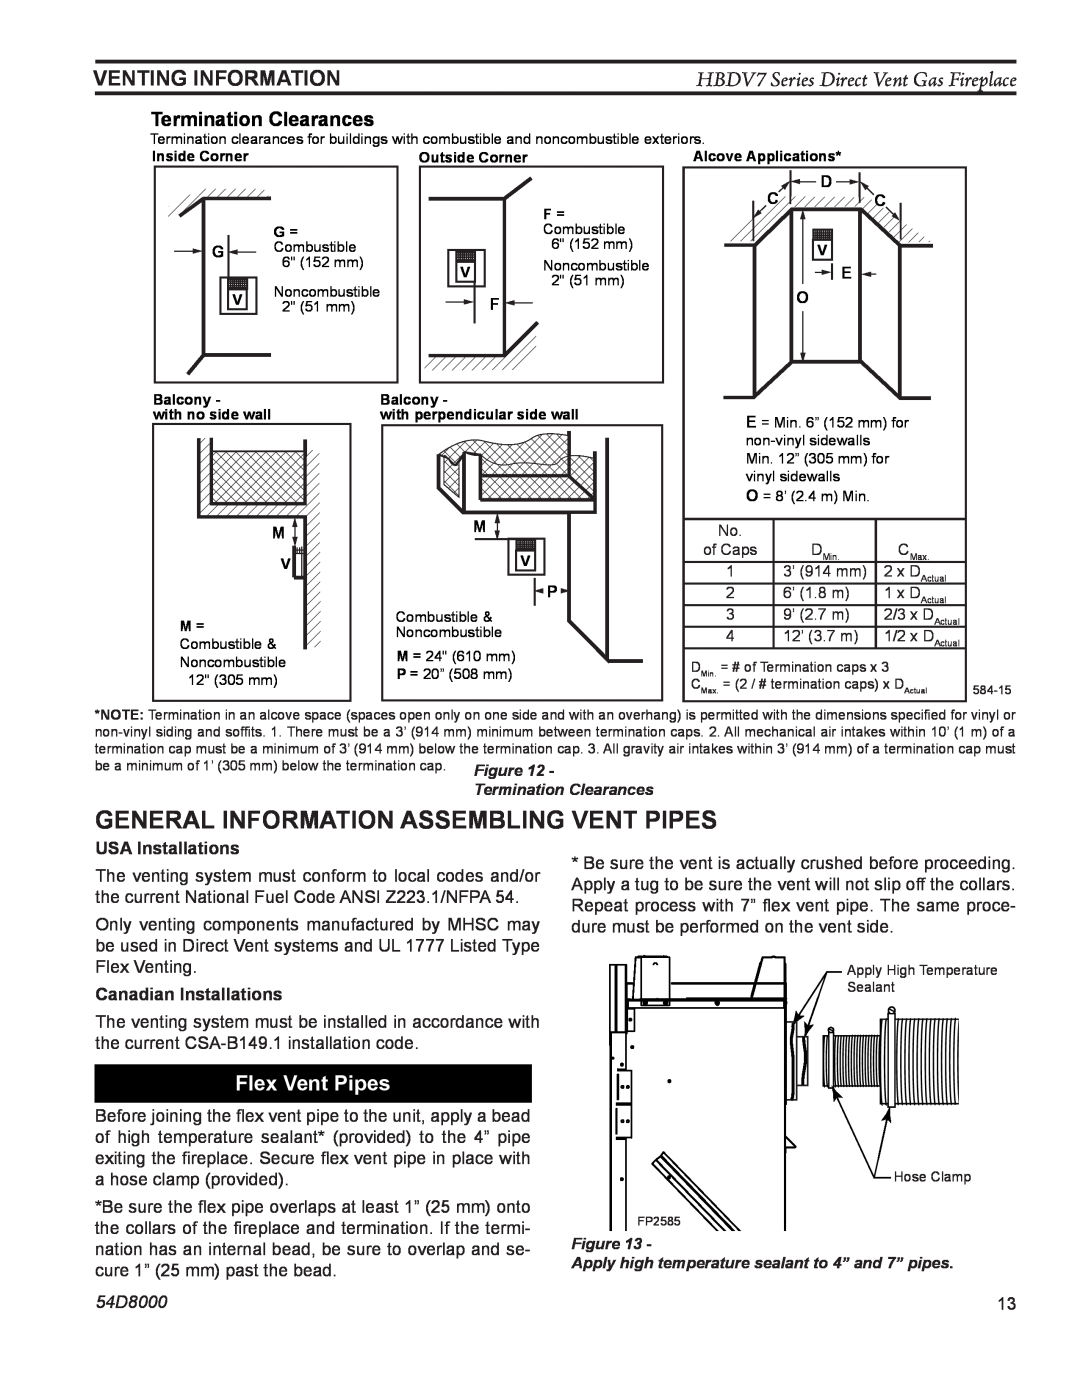 Monessen Hearth HBDV400N/PSC7 manual General Information Assembling Vent Pipes, Venting INFORMATION, Flex Vent Pipes, D C C 